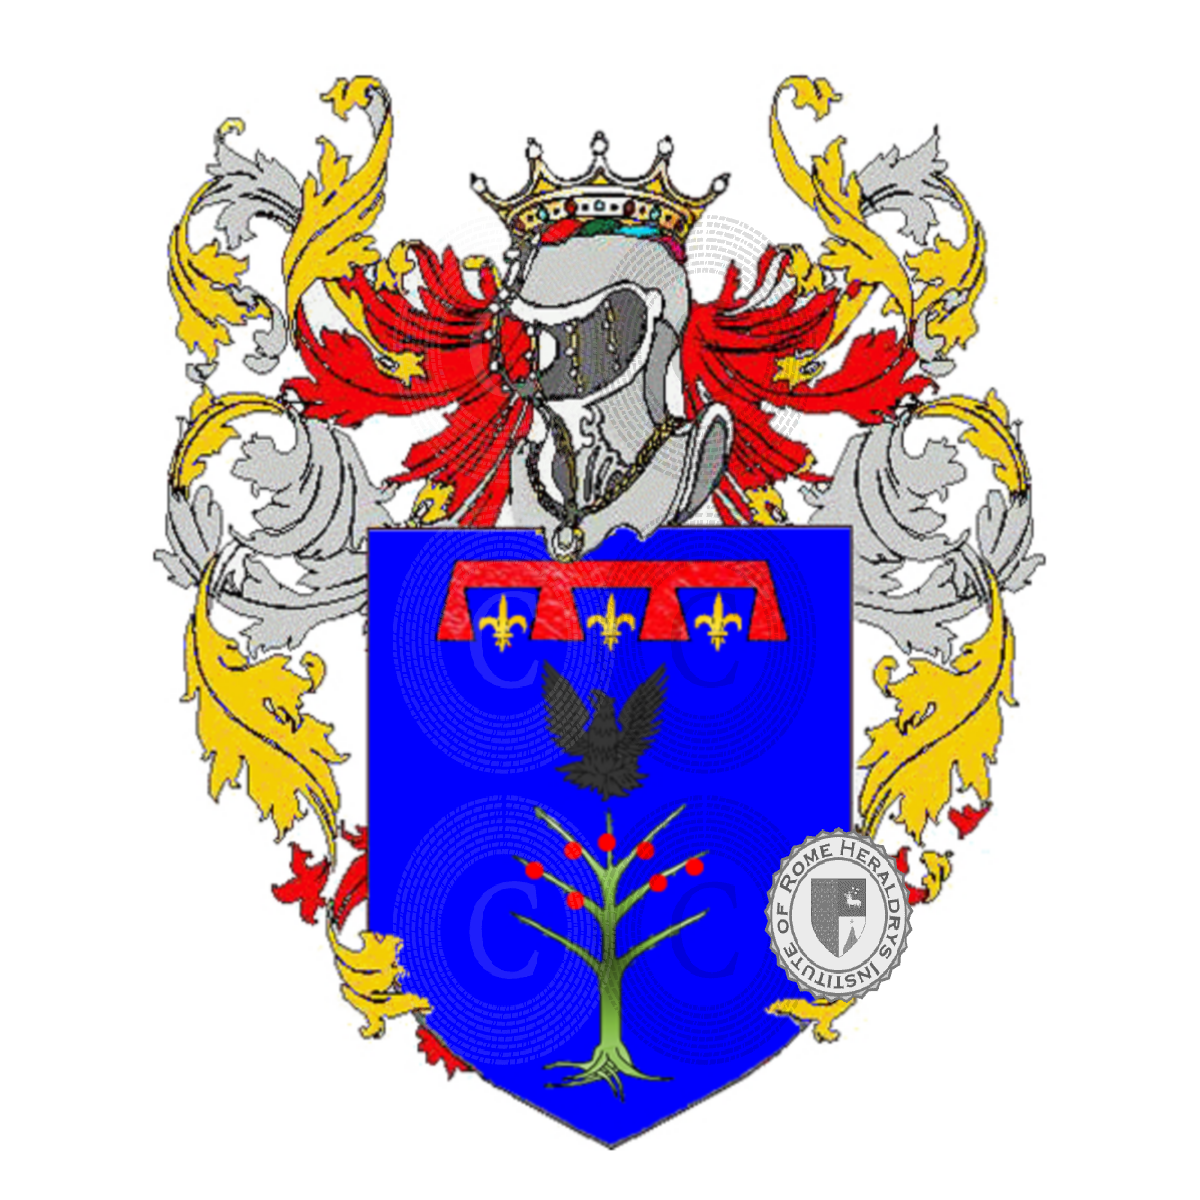 Coat of arms of familygabussi